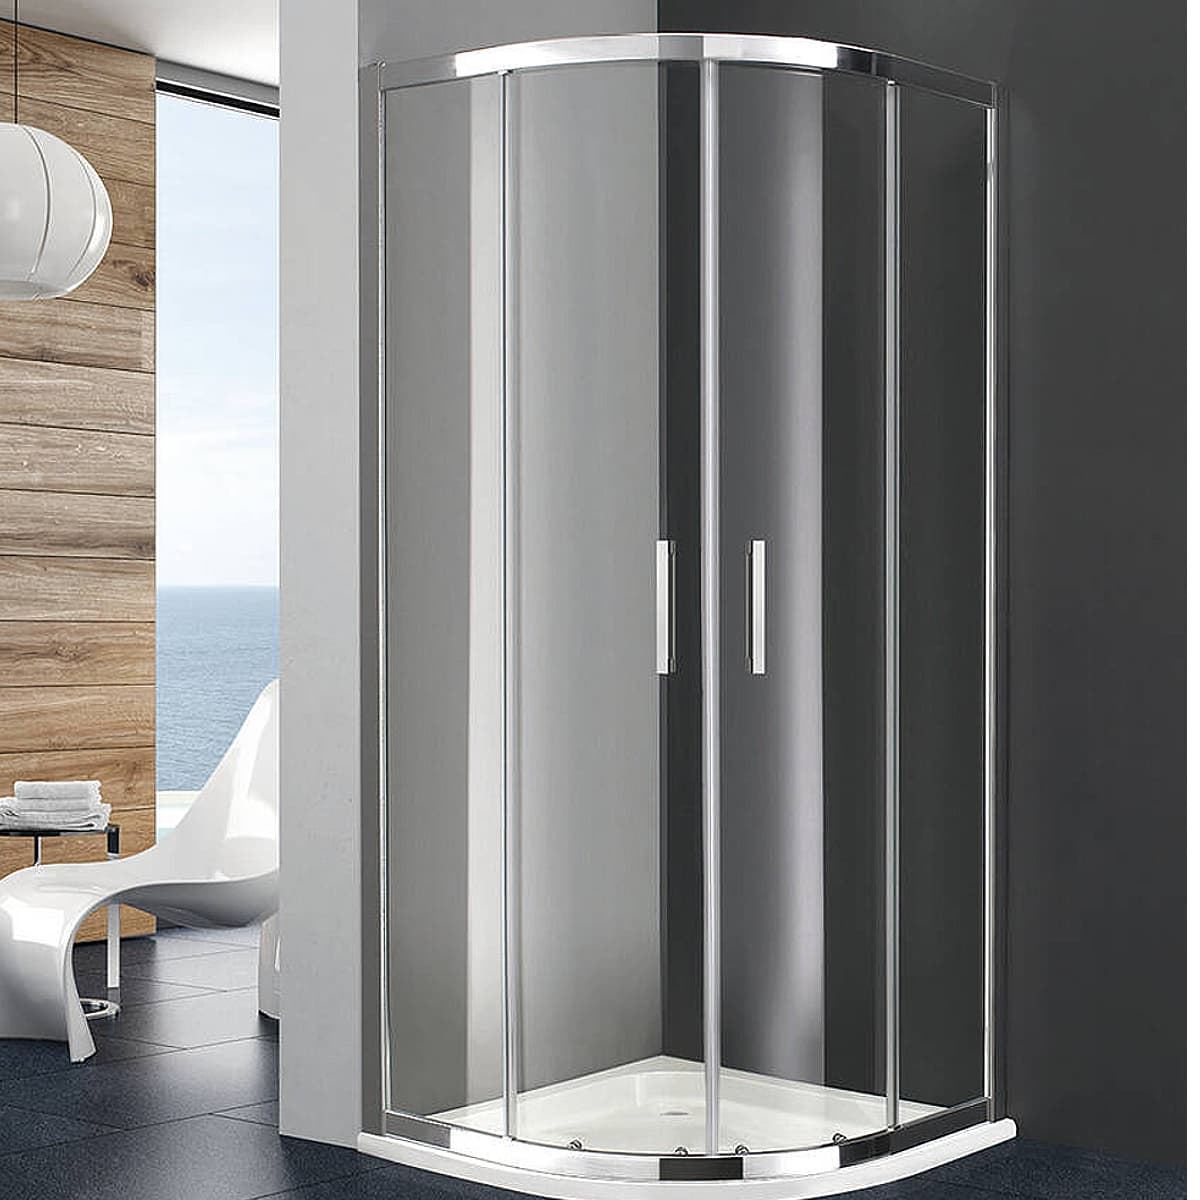 Mampara de ducha semicircular plata brillo y cristal modelo PRESTIGE - Imagen 1